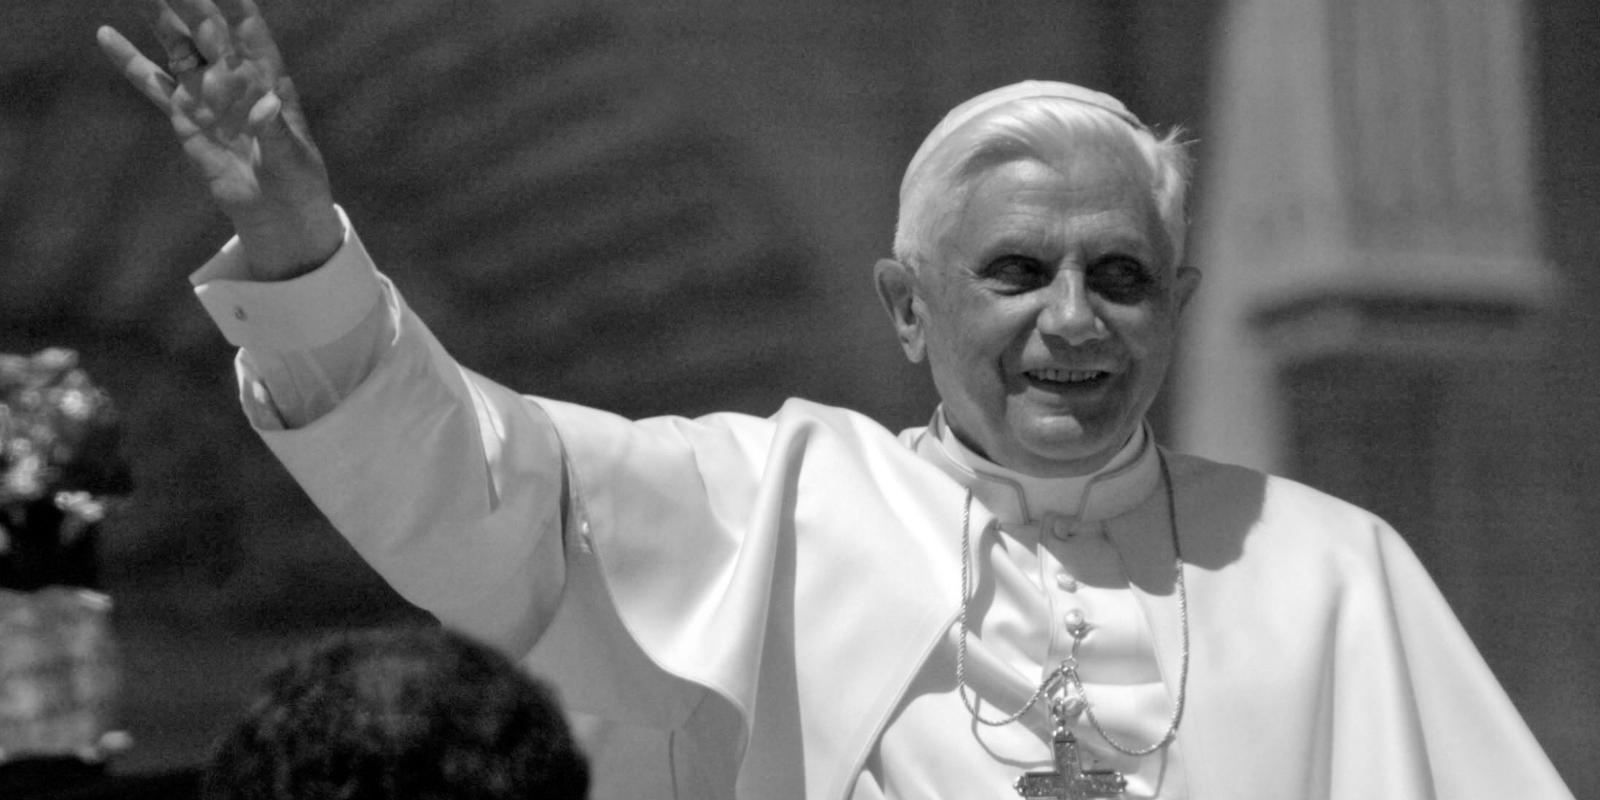 Generalaudienz mit Papst Benedikt XVI. auf dem Petersplatz in Rom am 27. April 2005.